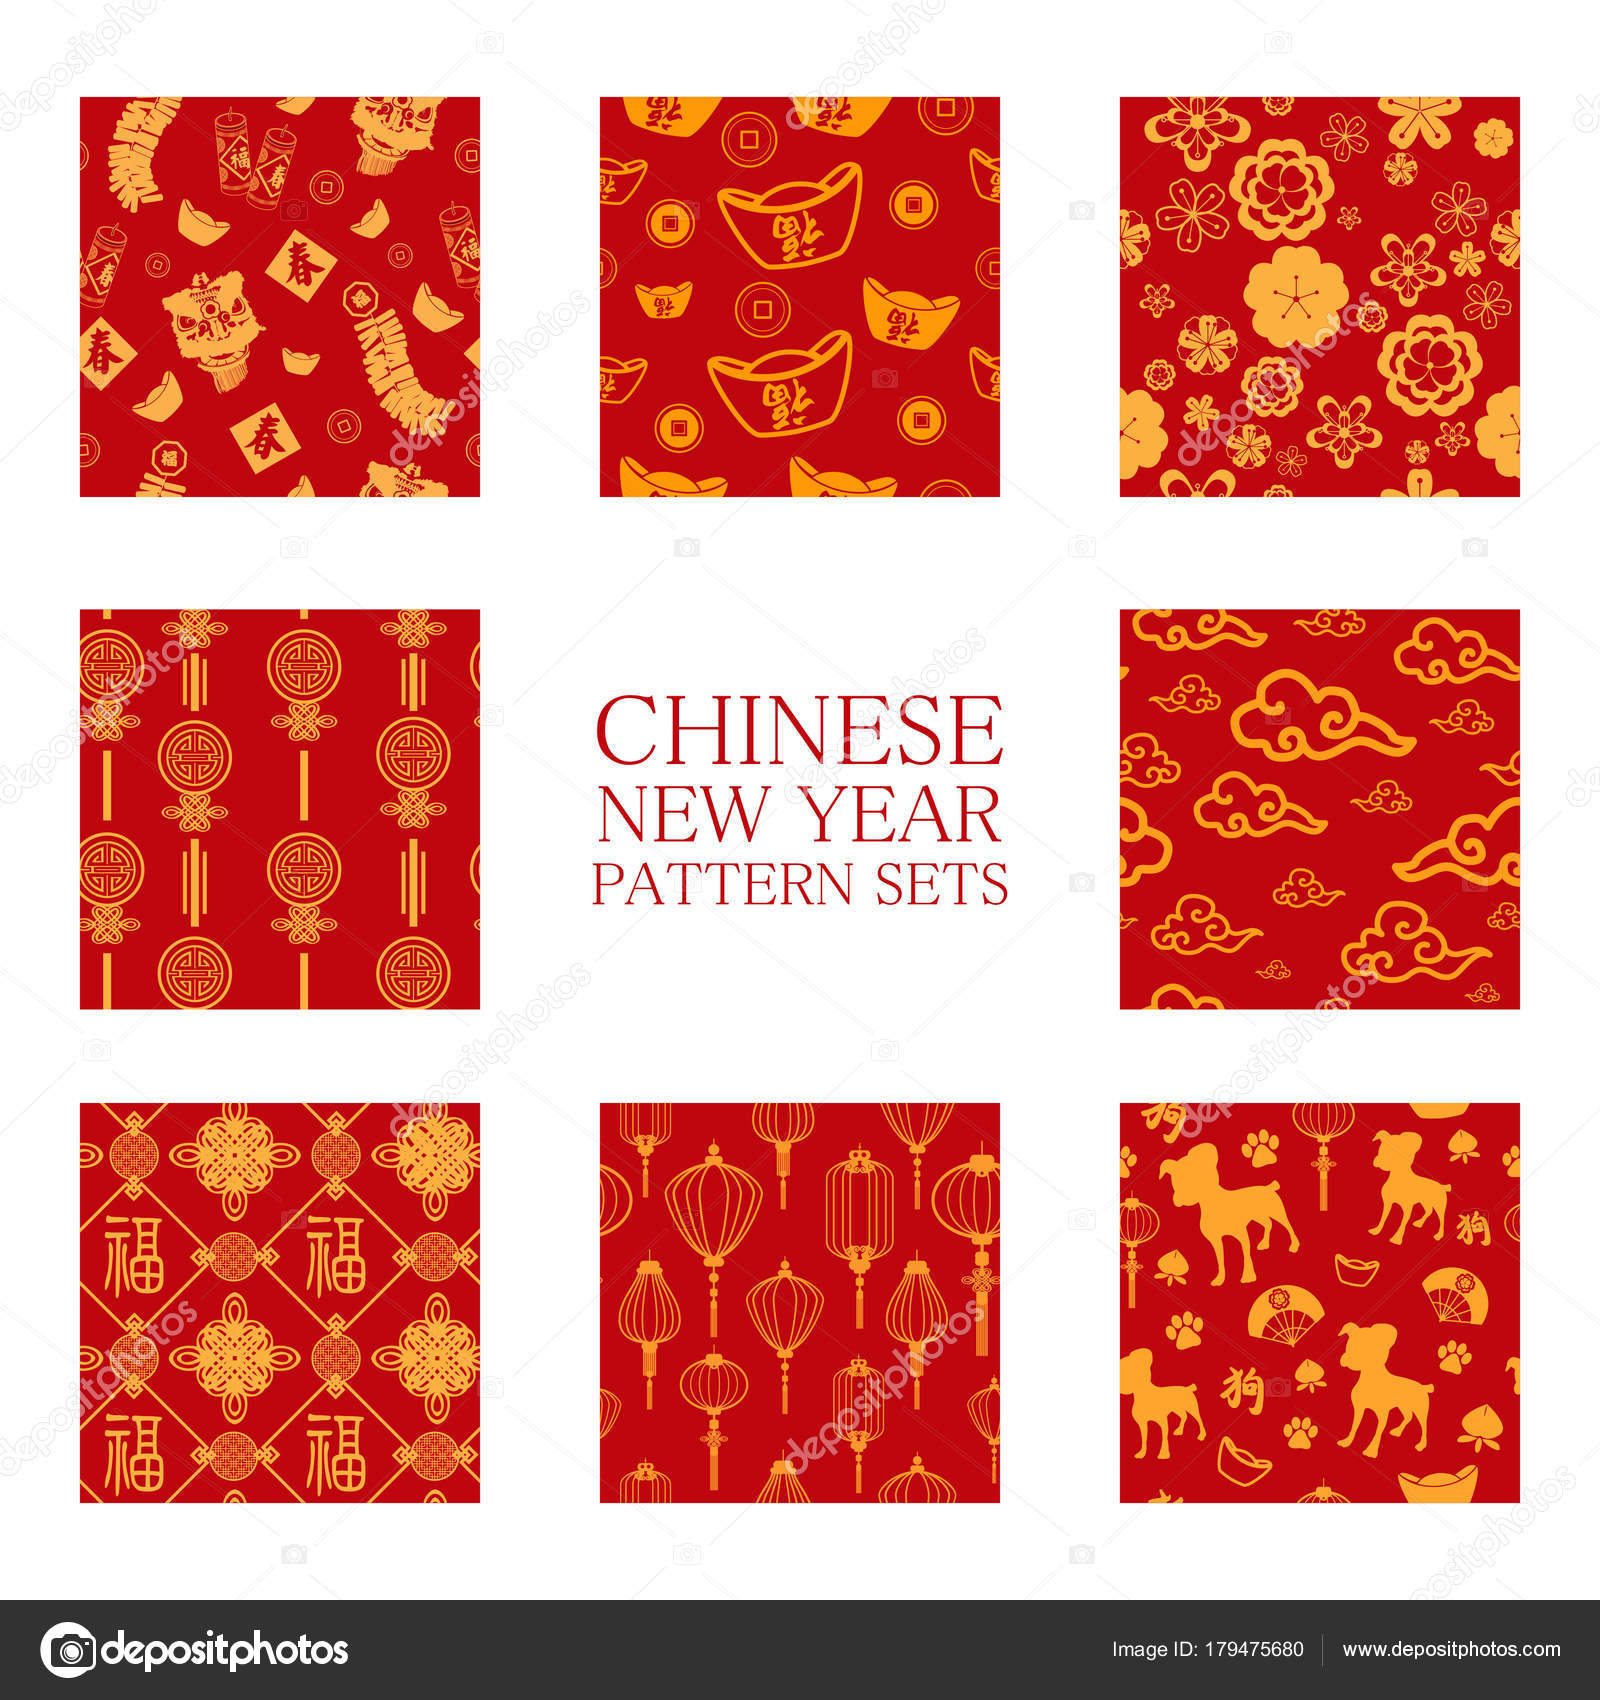 Chinese New Year Patterns - HD Wallpaper 